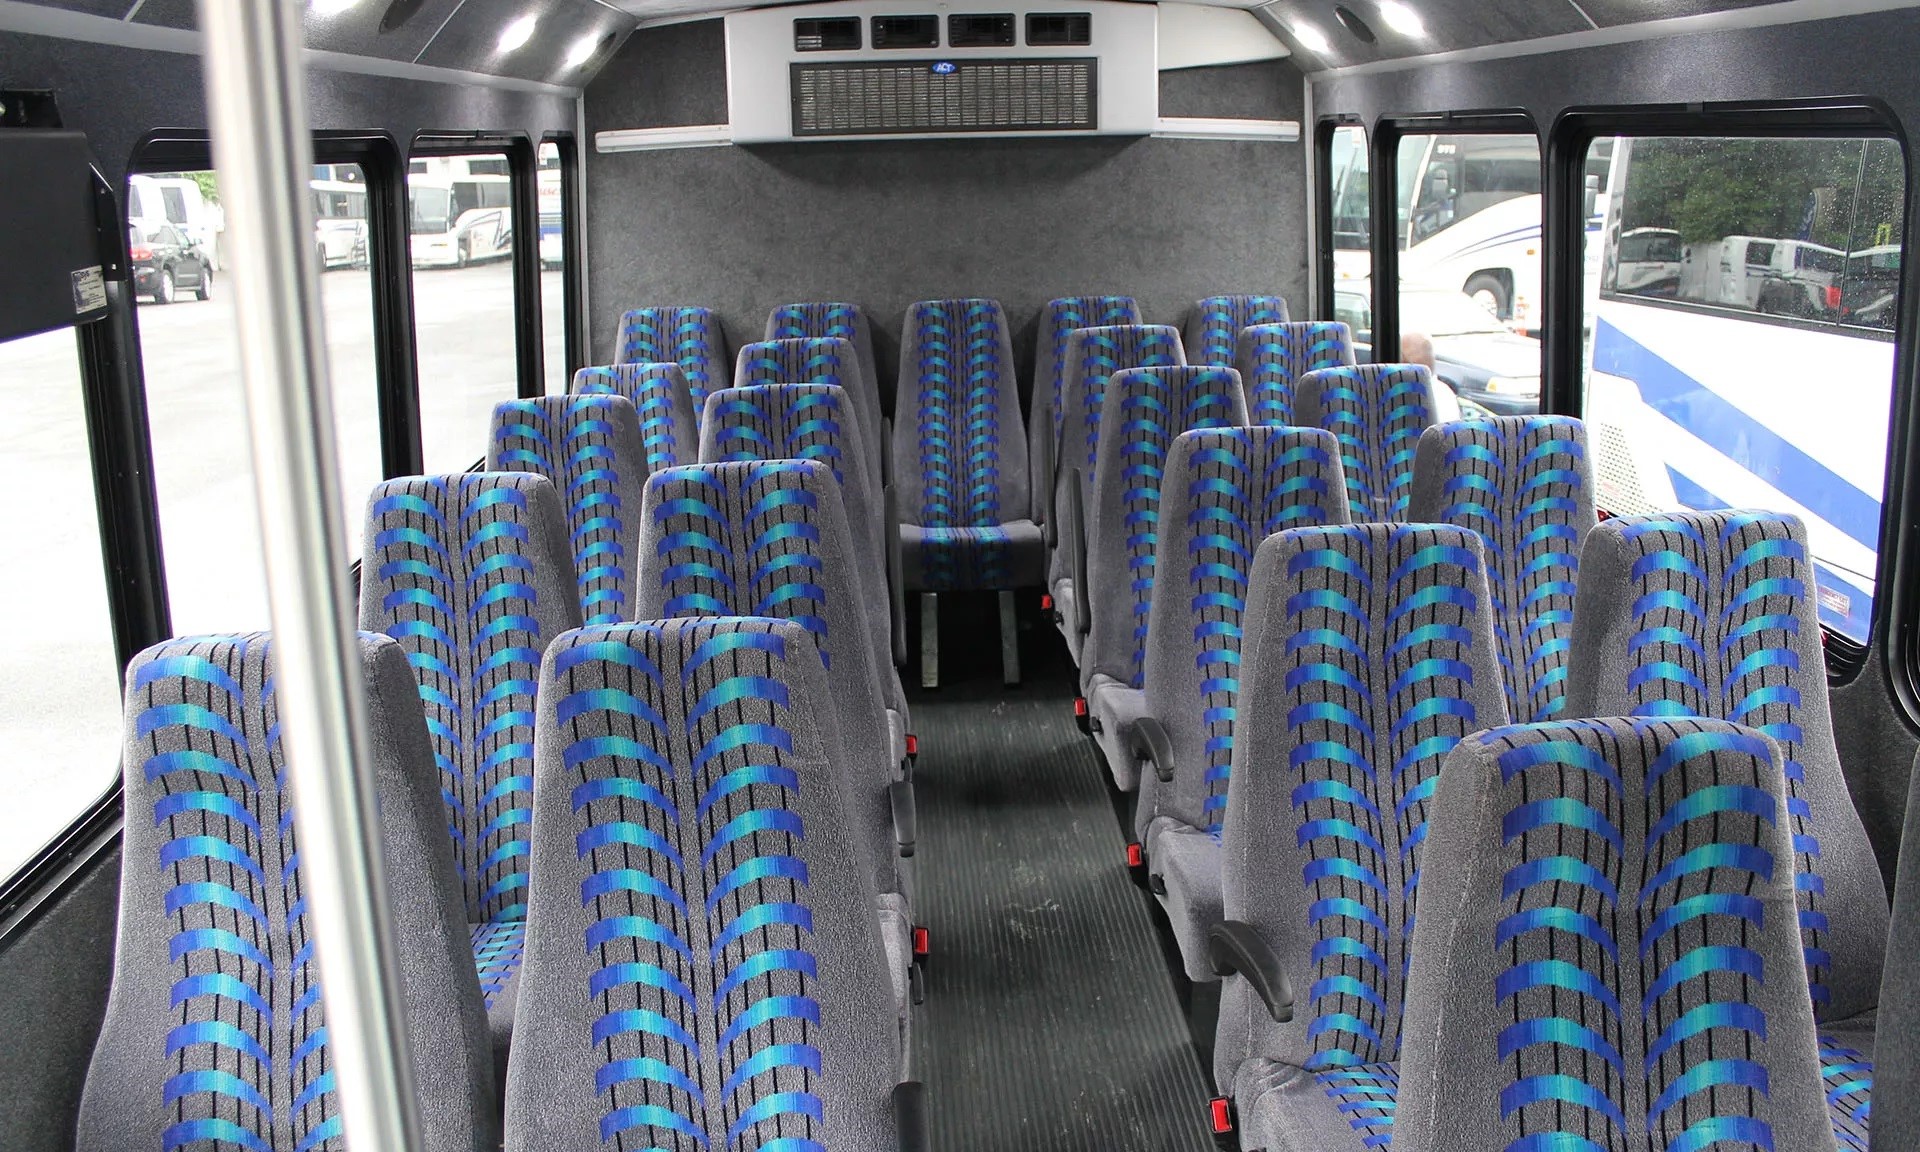 24 passengers Bus interior image